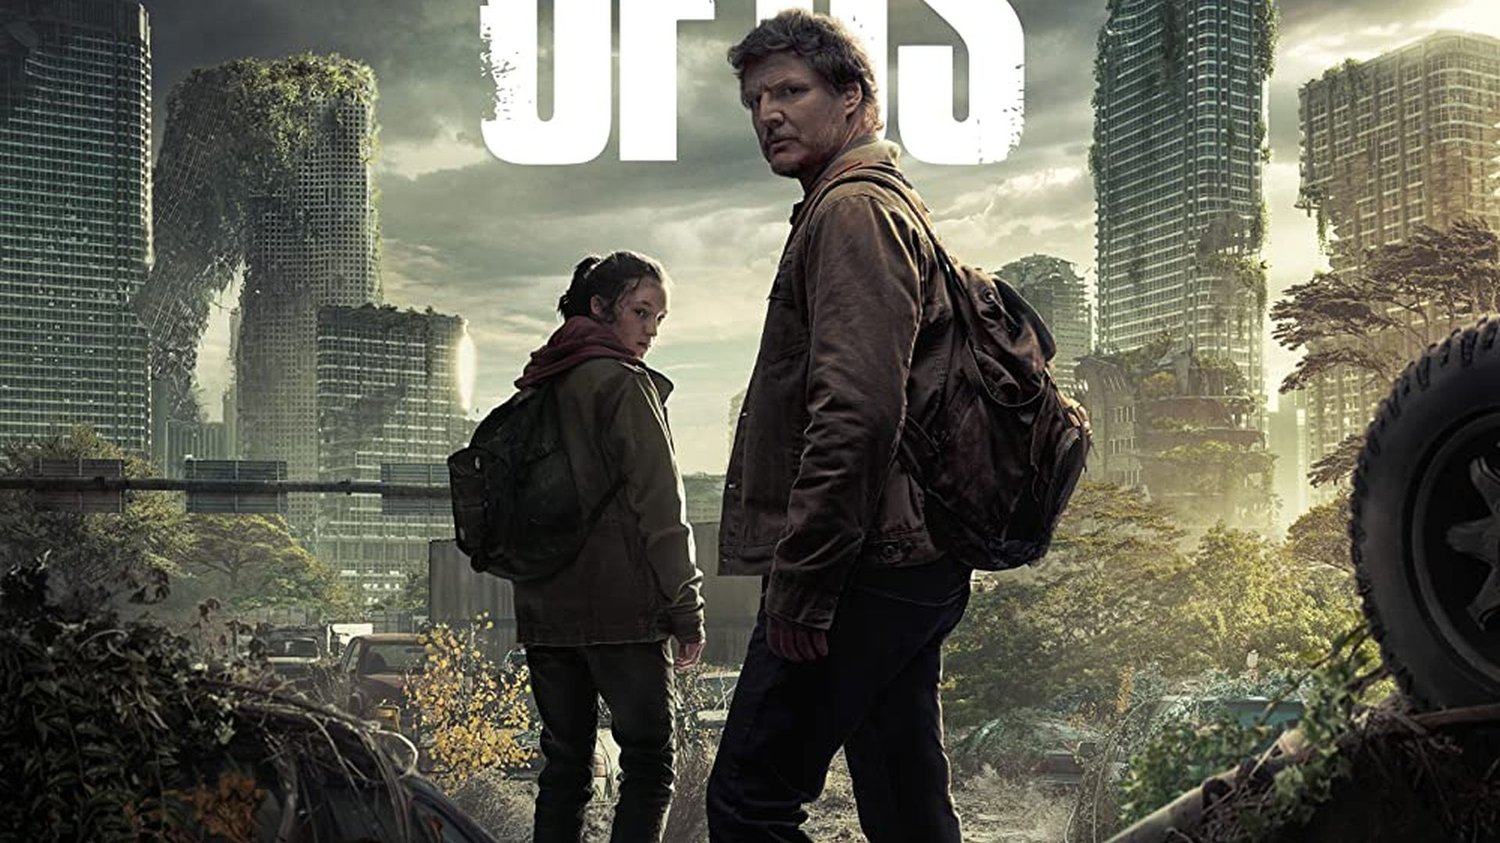 The Last of Us IMDB ratings in a nutshell : r/thelastofus